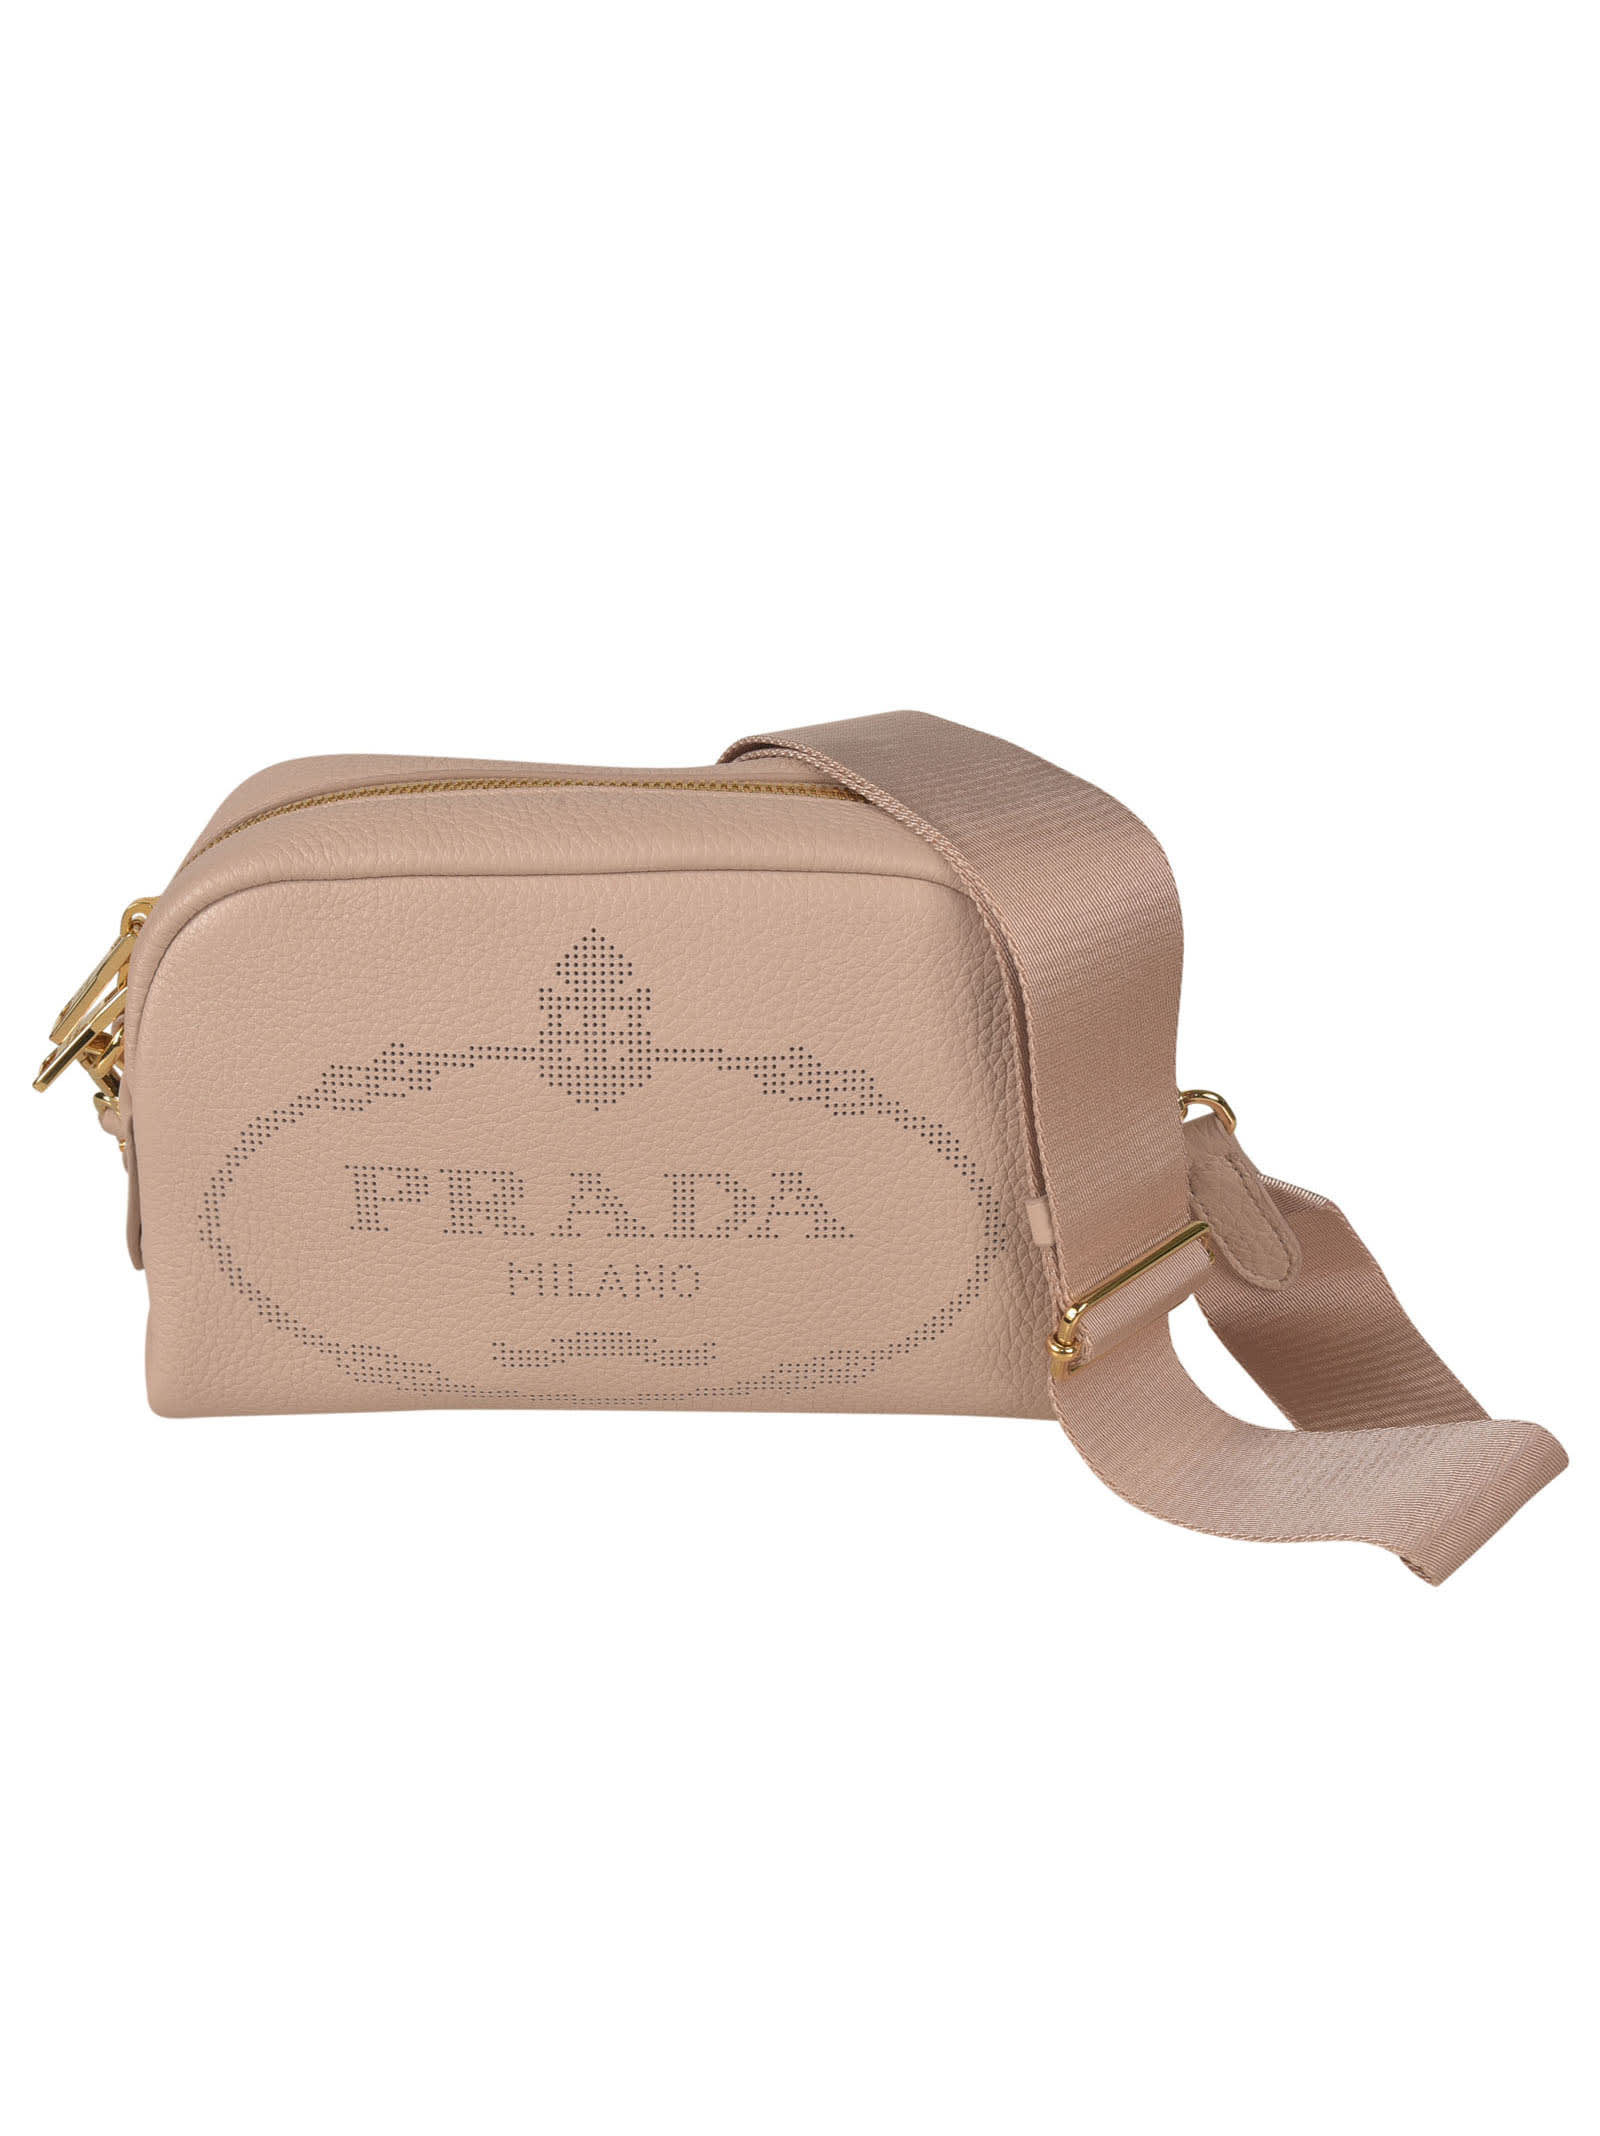 Prada Logo Detail Shoulder Bag